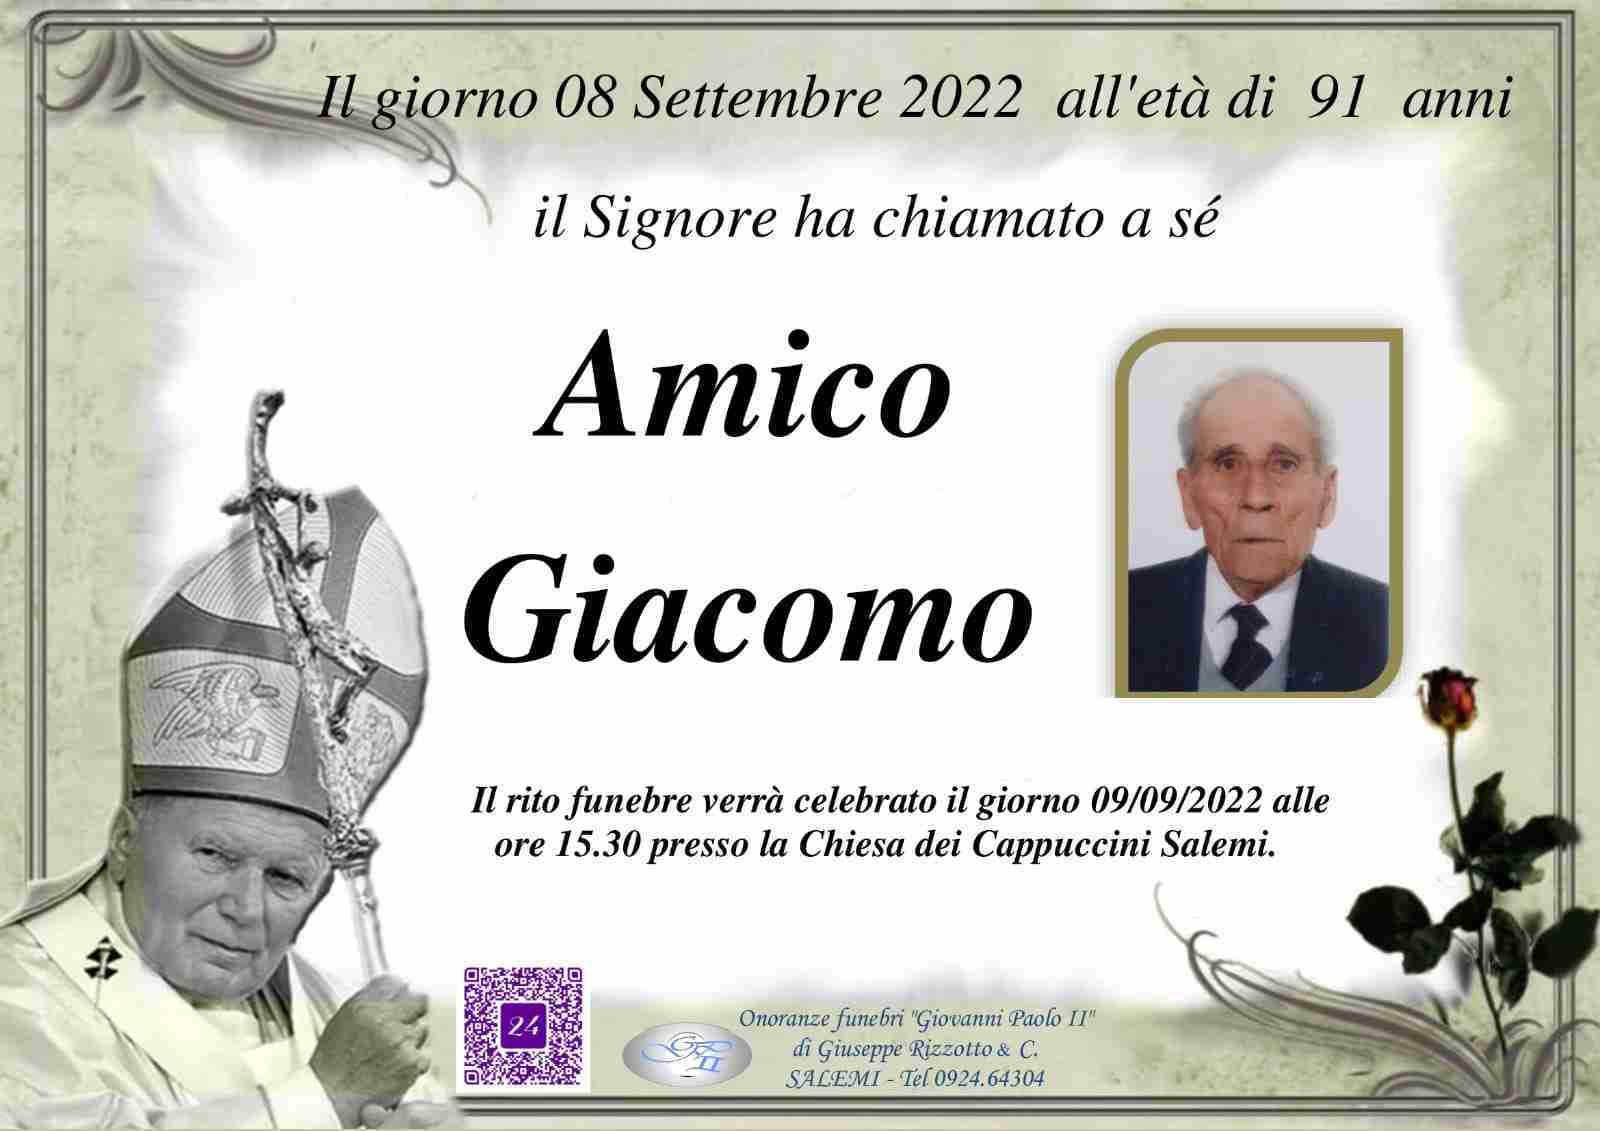 Giacomo Amico